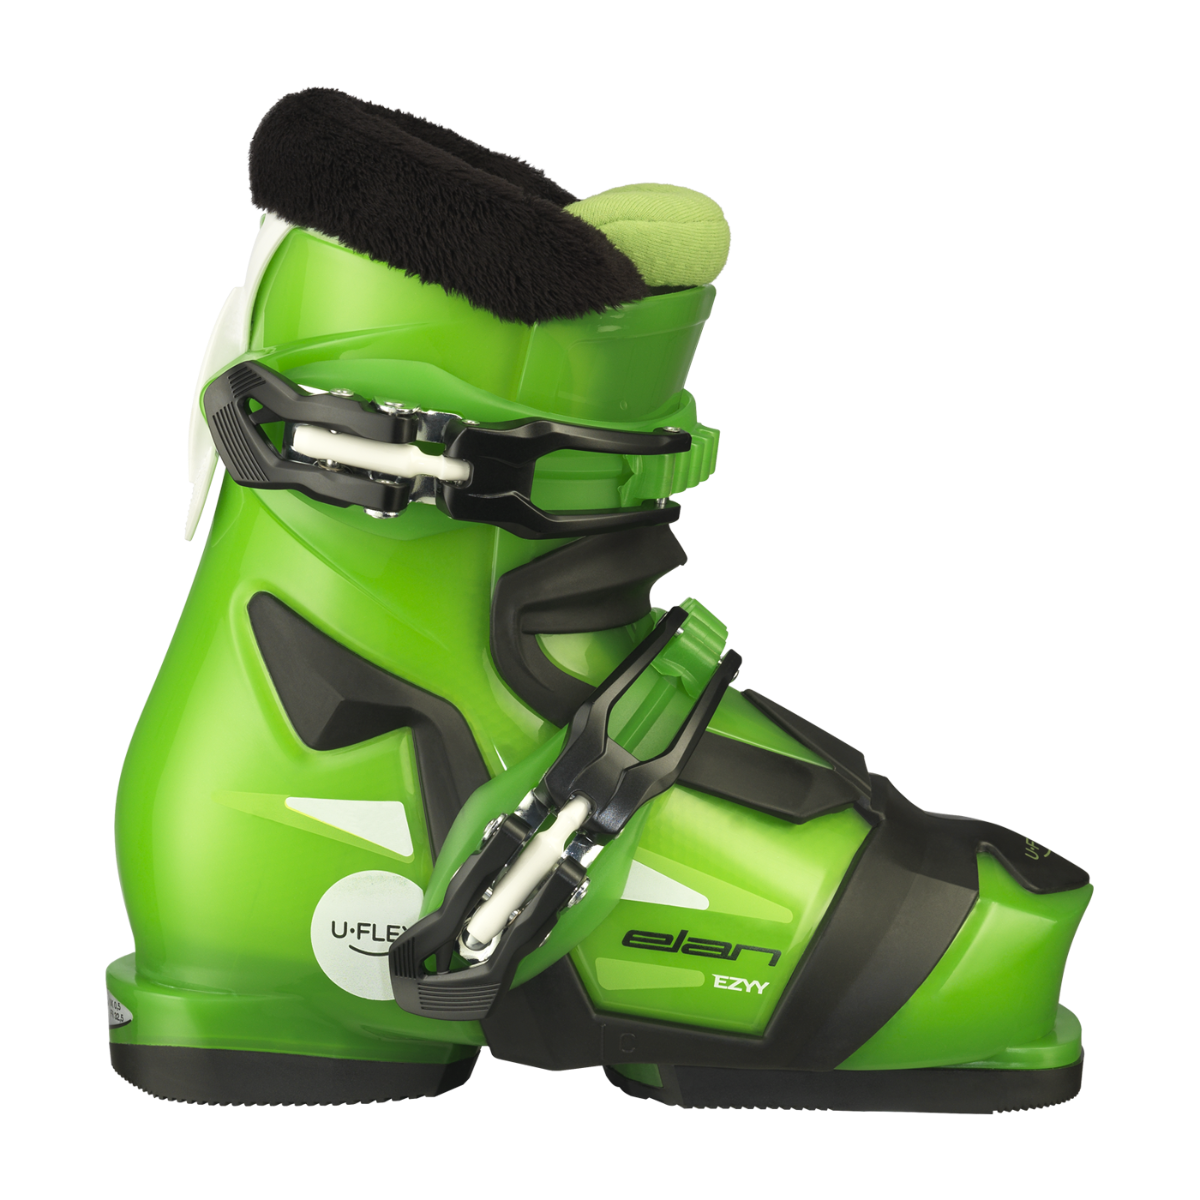 Elan Ezyy 2 Youth Ski Boots SKI BOOTS Elan 20.5  